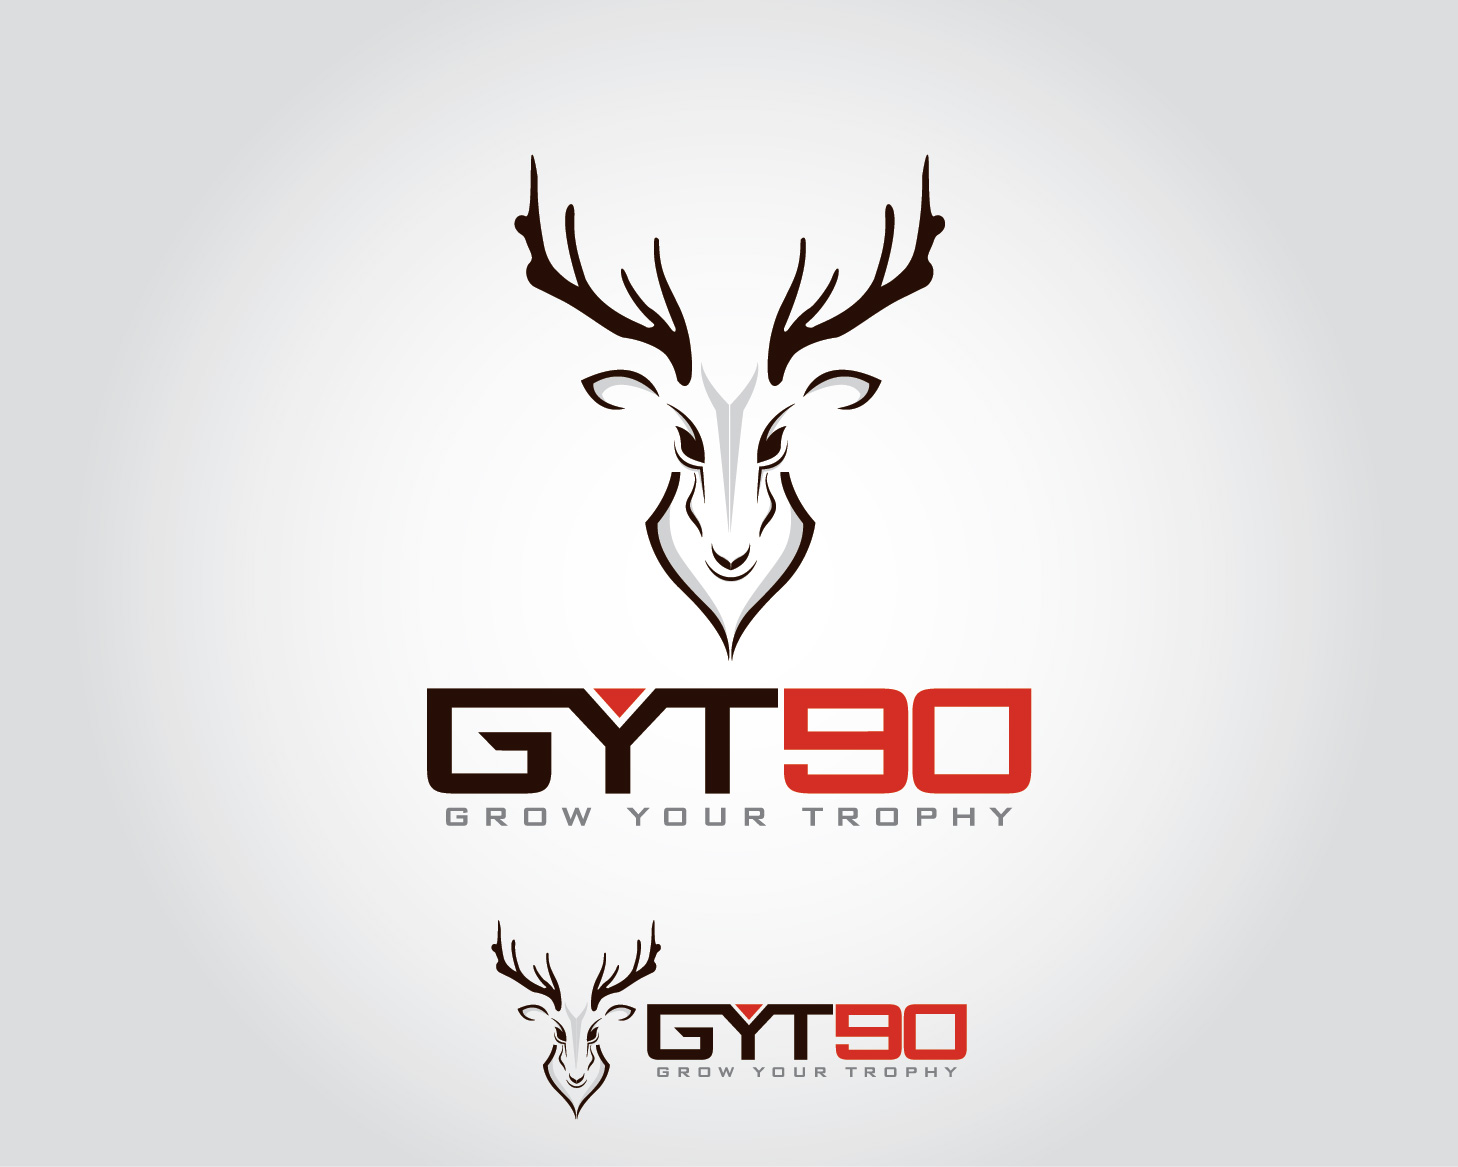 Logo Design entry 1192989 submitted by bocaj.ecyoj to the Logo Design for TYG 90 run by MSS,LLC